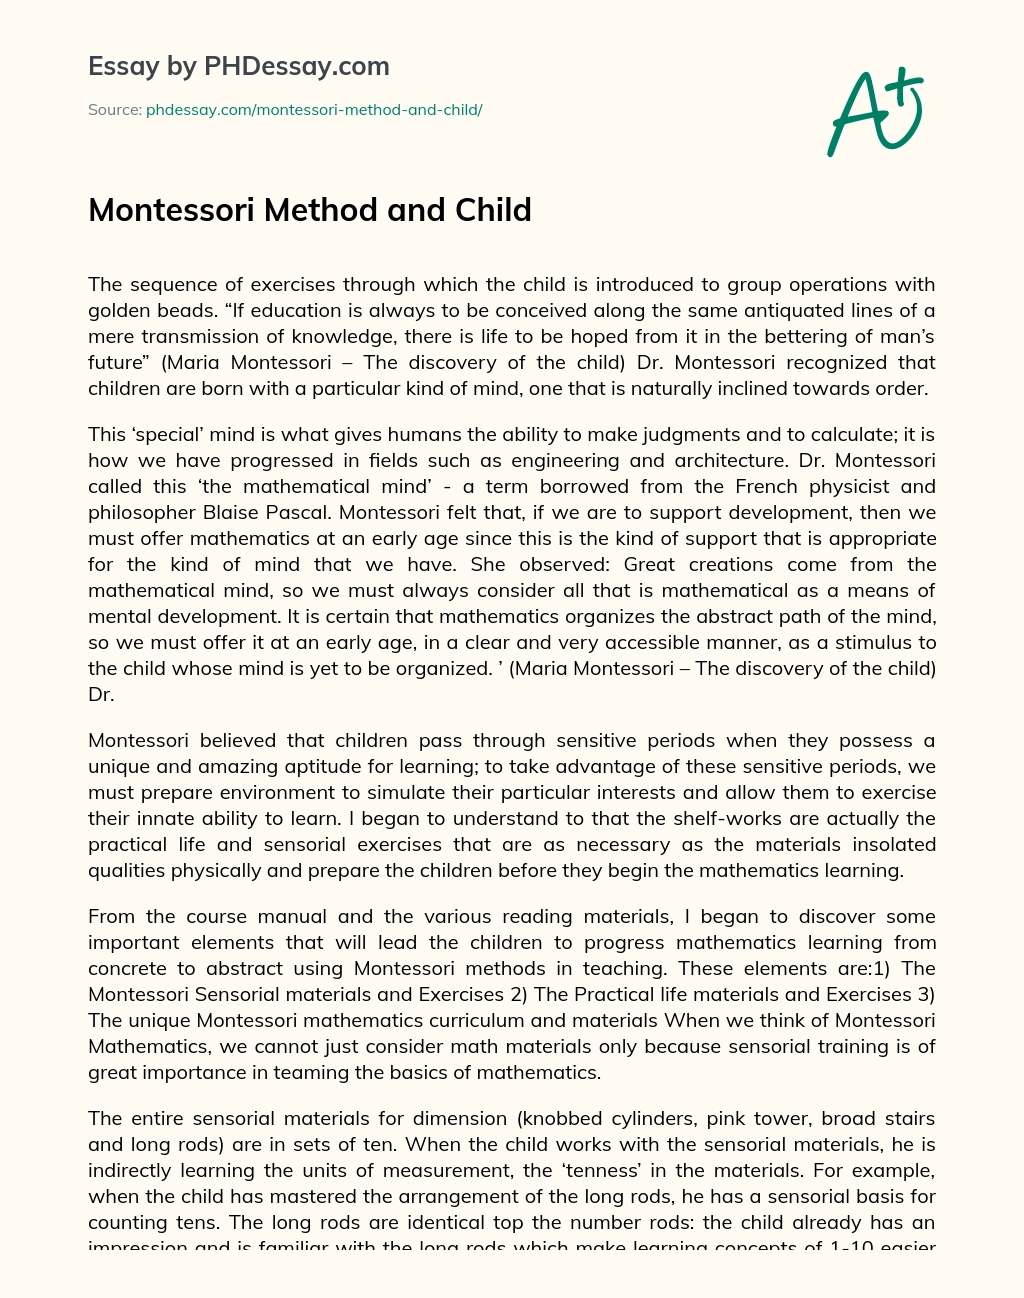 Montessori Method and Child essay